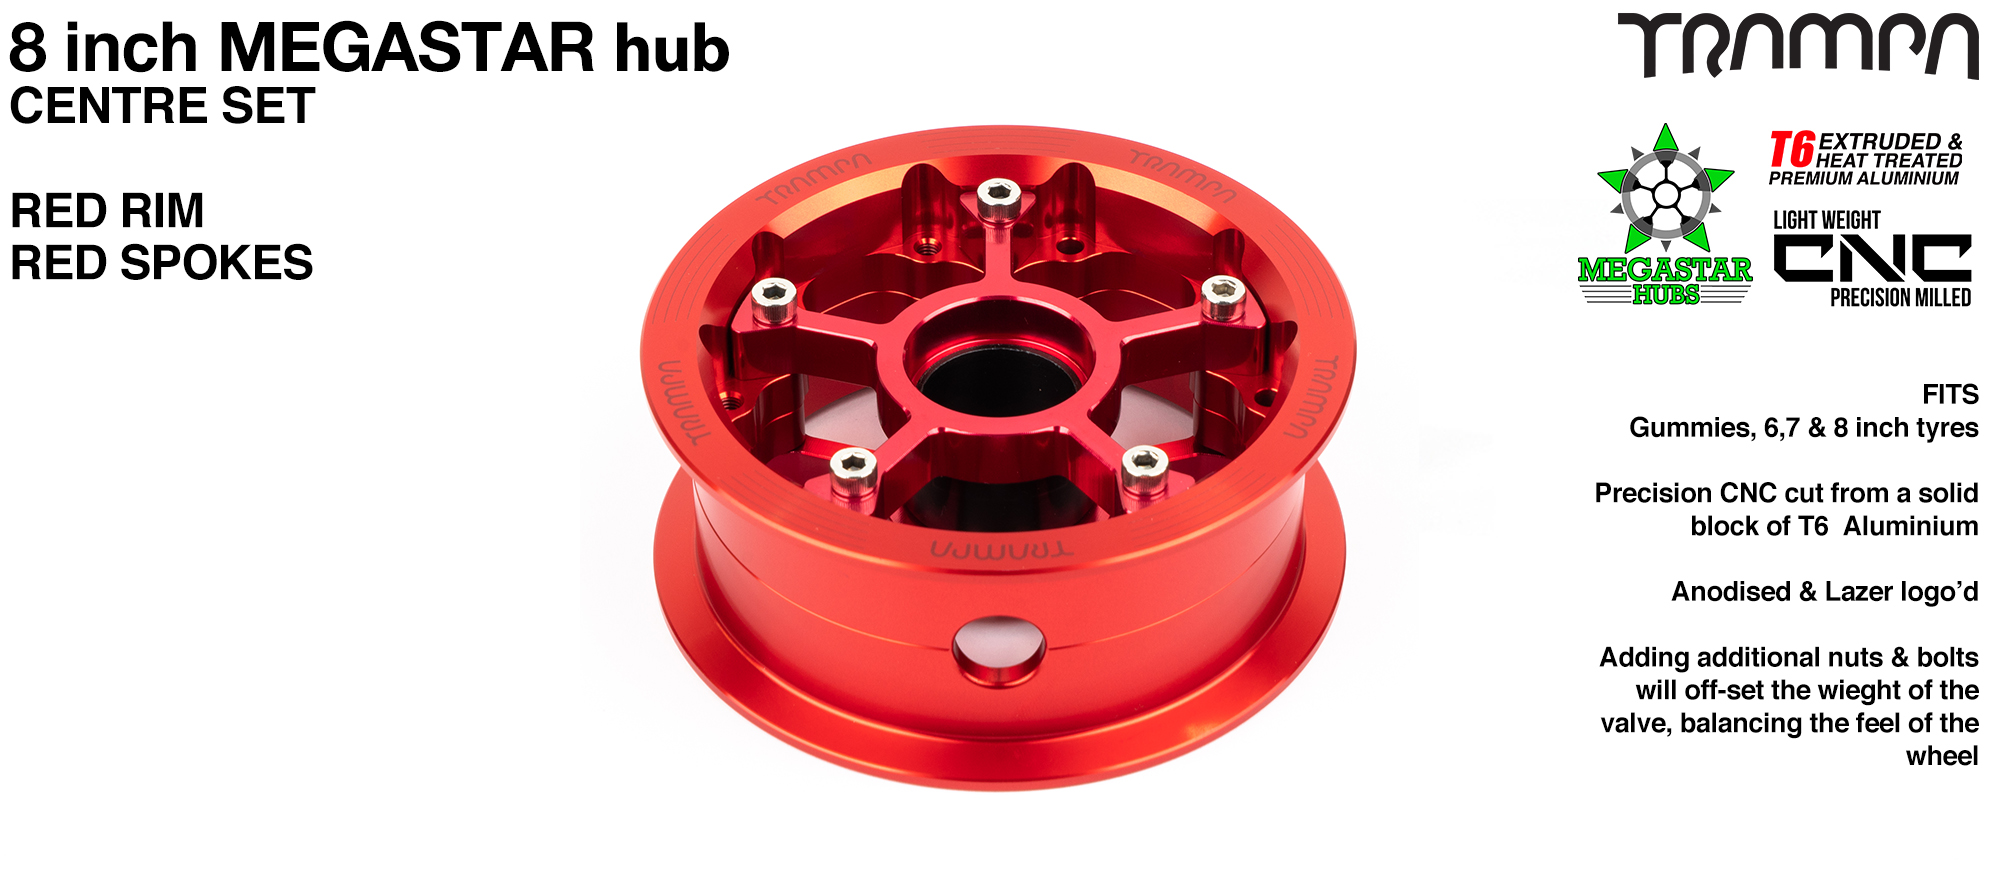 CENTRE-SET MEGASTAR 8 Hub 3.75 x 2 Inch - RED Rim with RED Spokes 